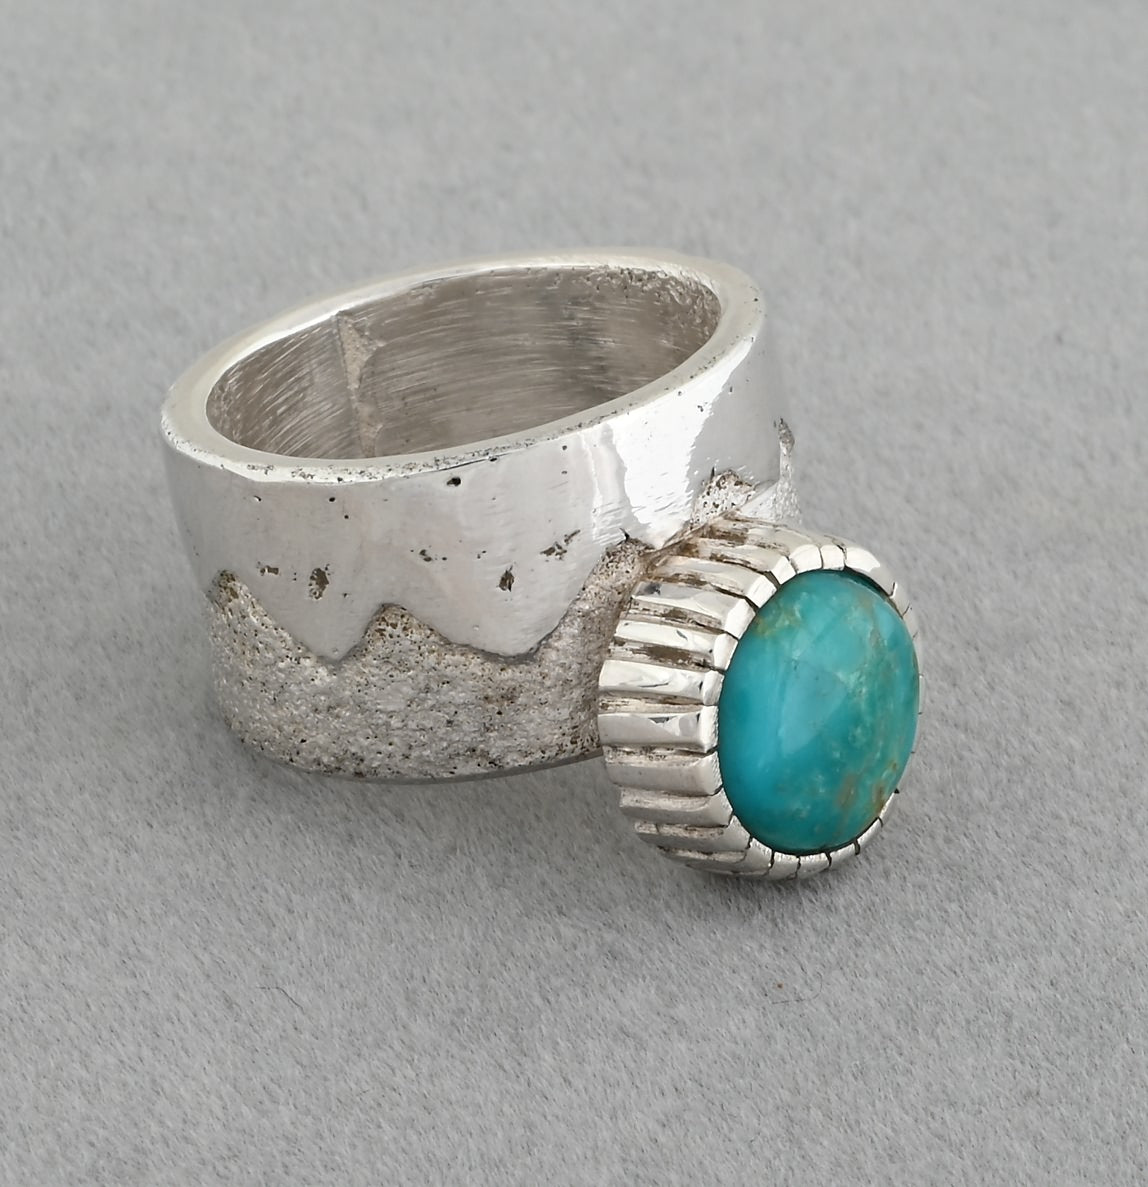 Heavy Tufa Cast Ring with Turquoise (Navajo)